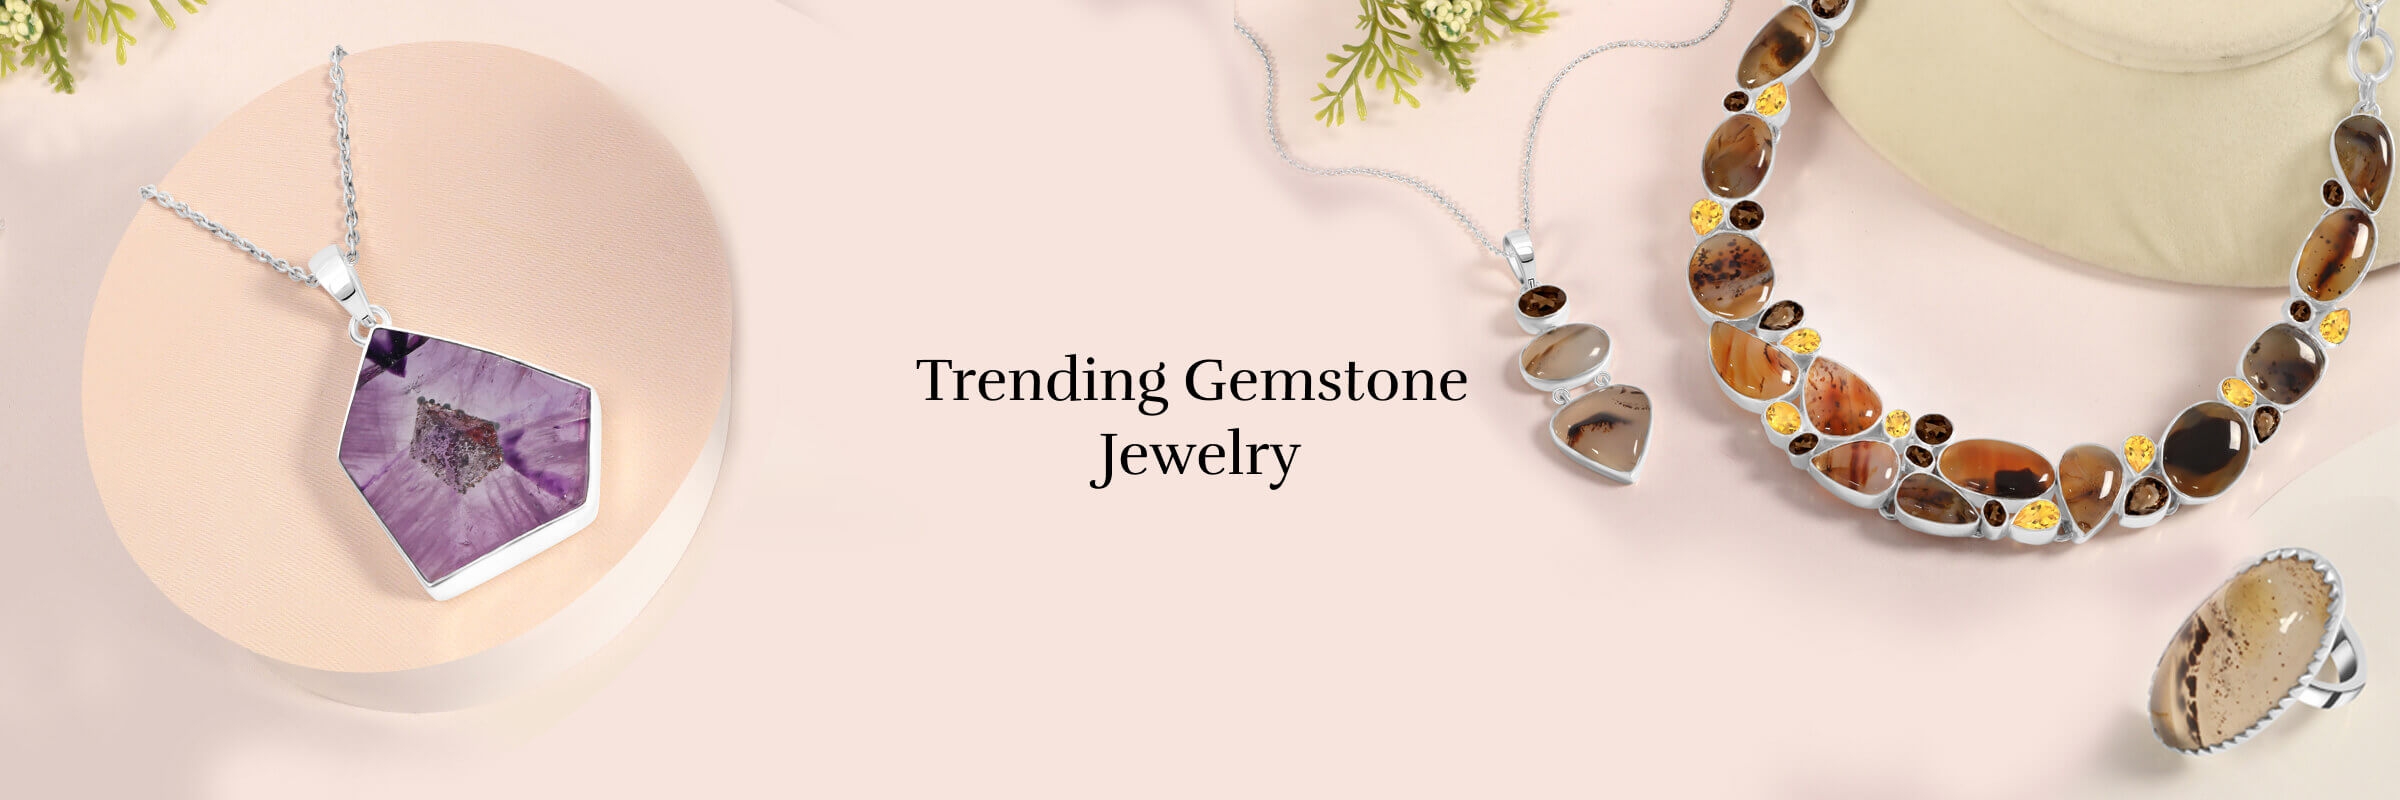 Trending Gemstone Jewelry Online for Women 1